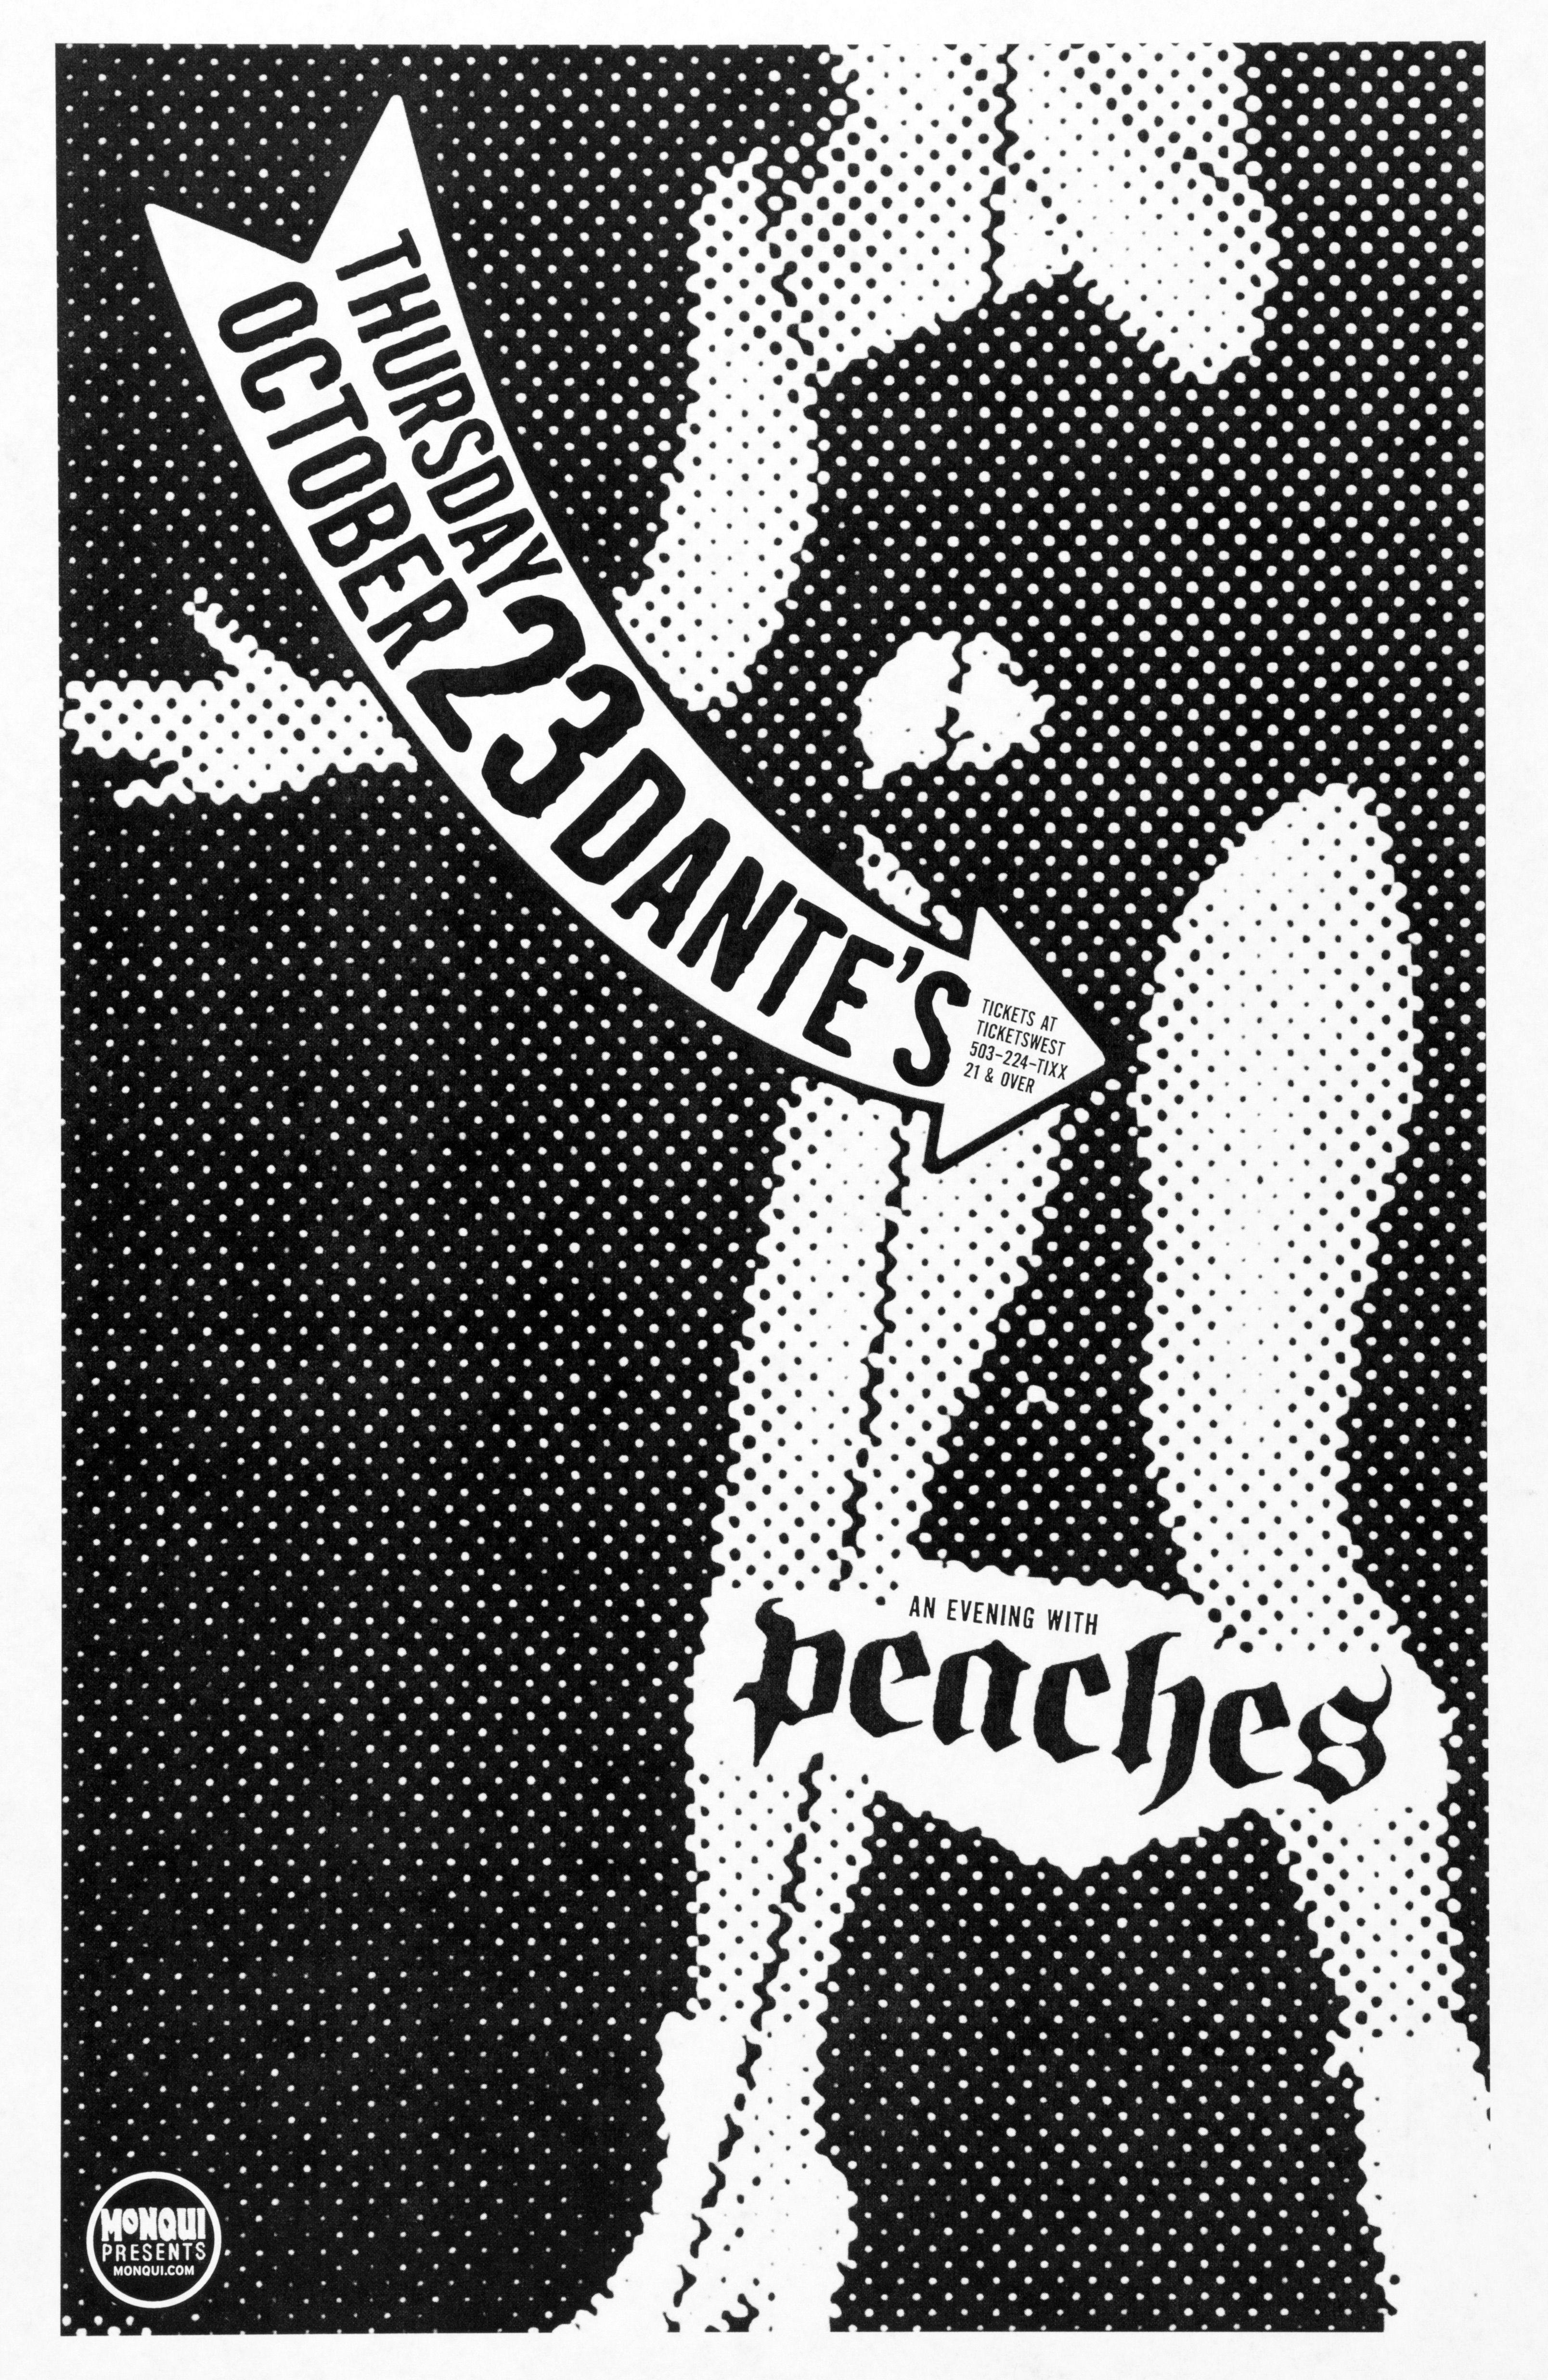 MXP-147.3 Peaches Dante's 2003 Concert Poster